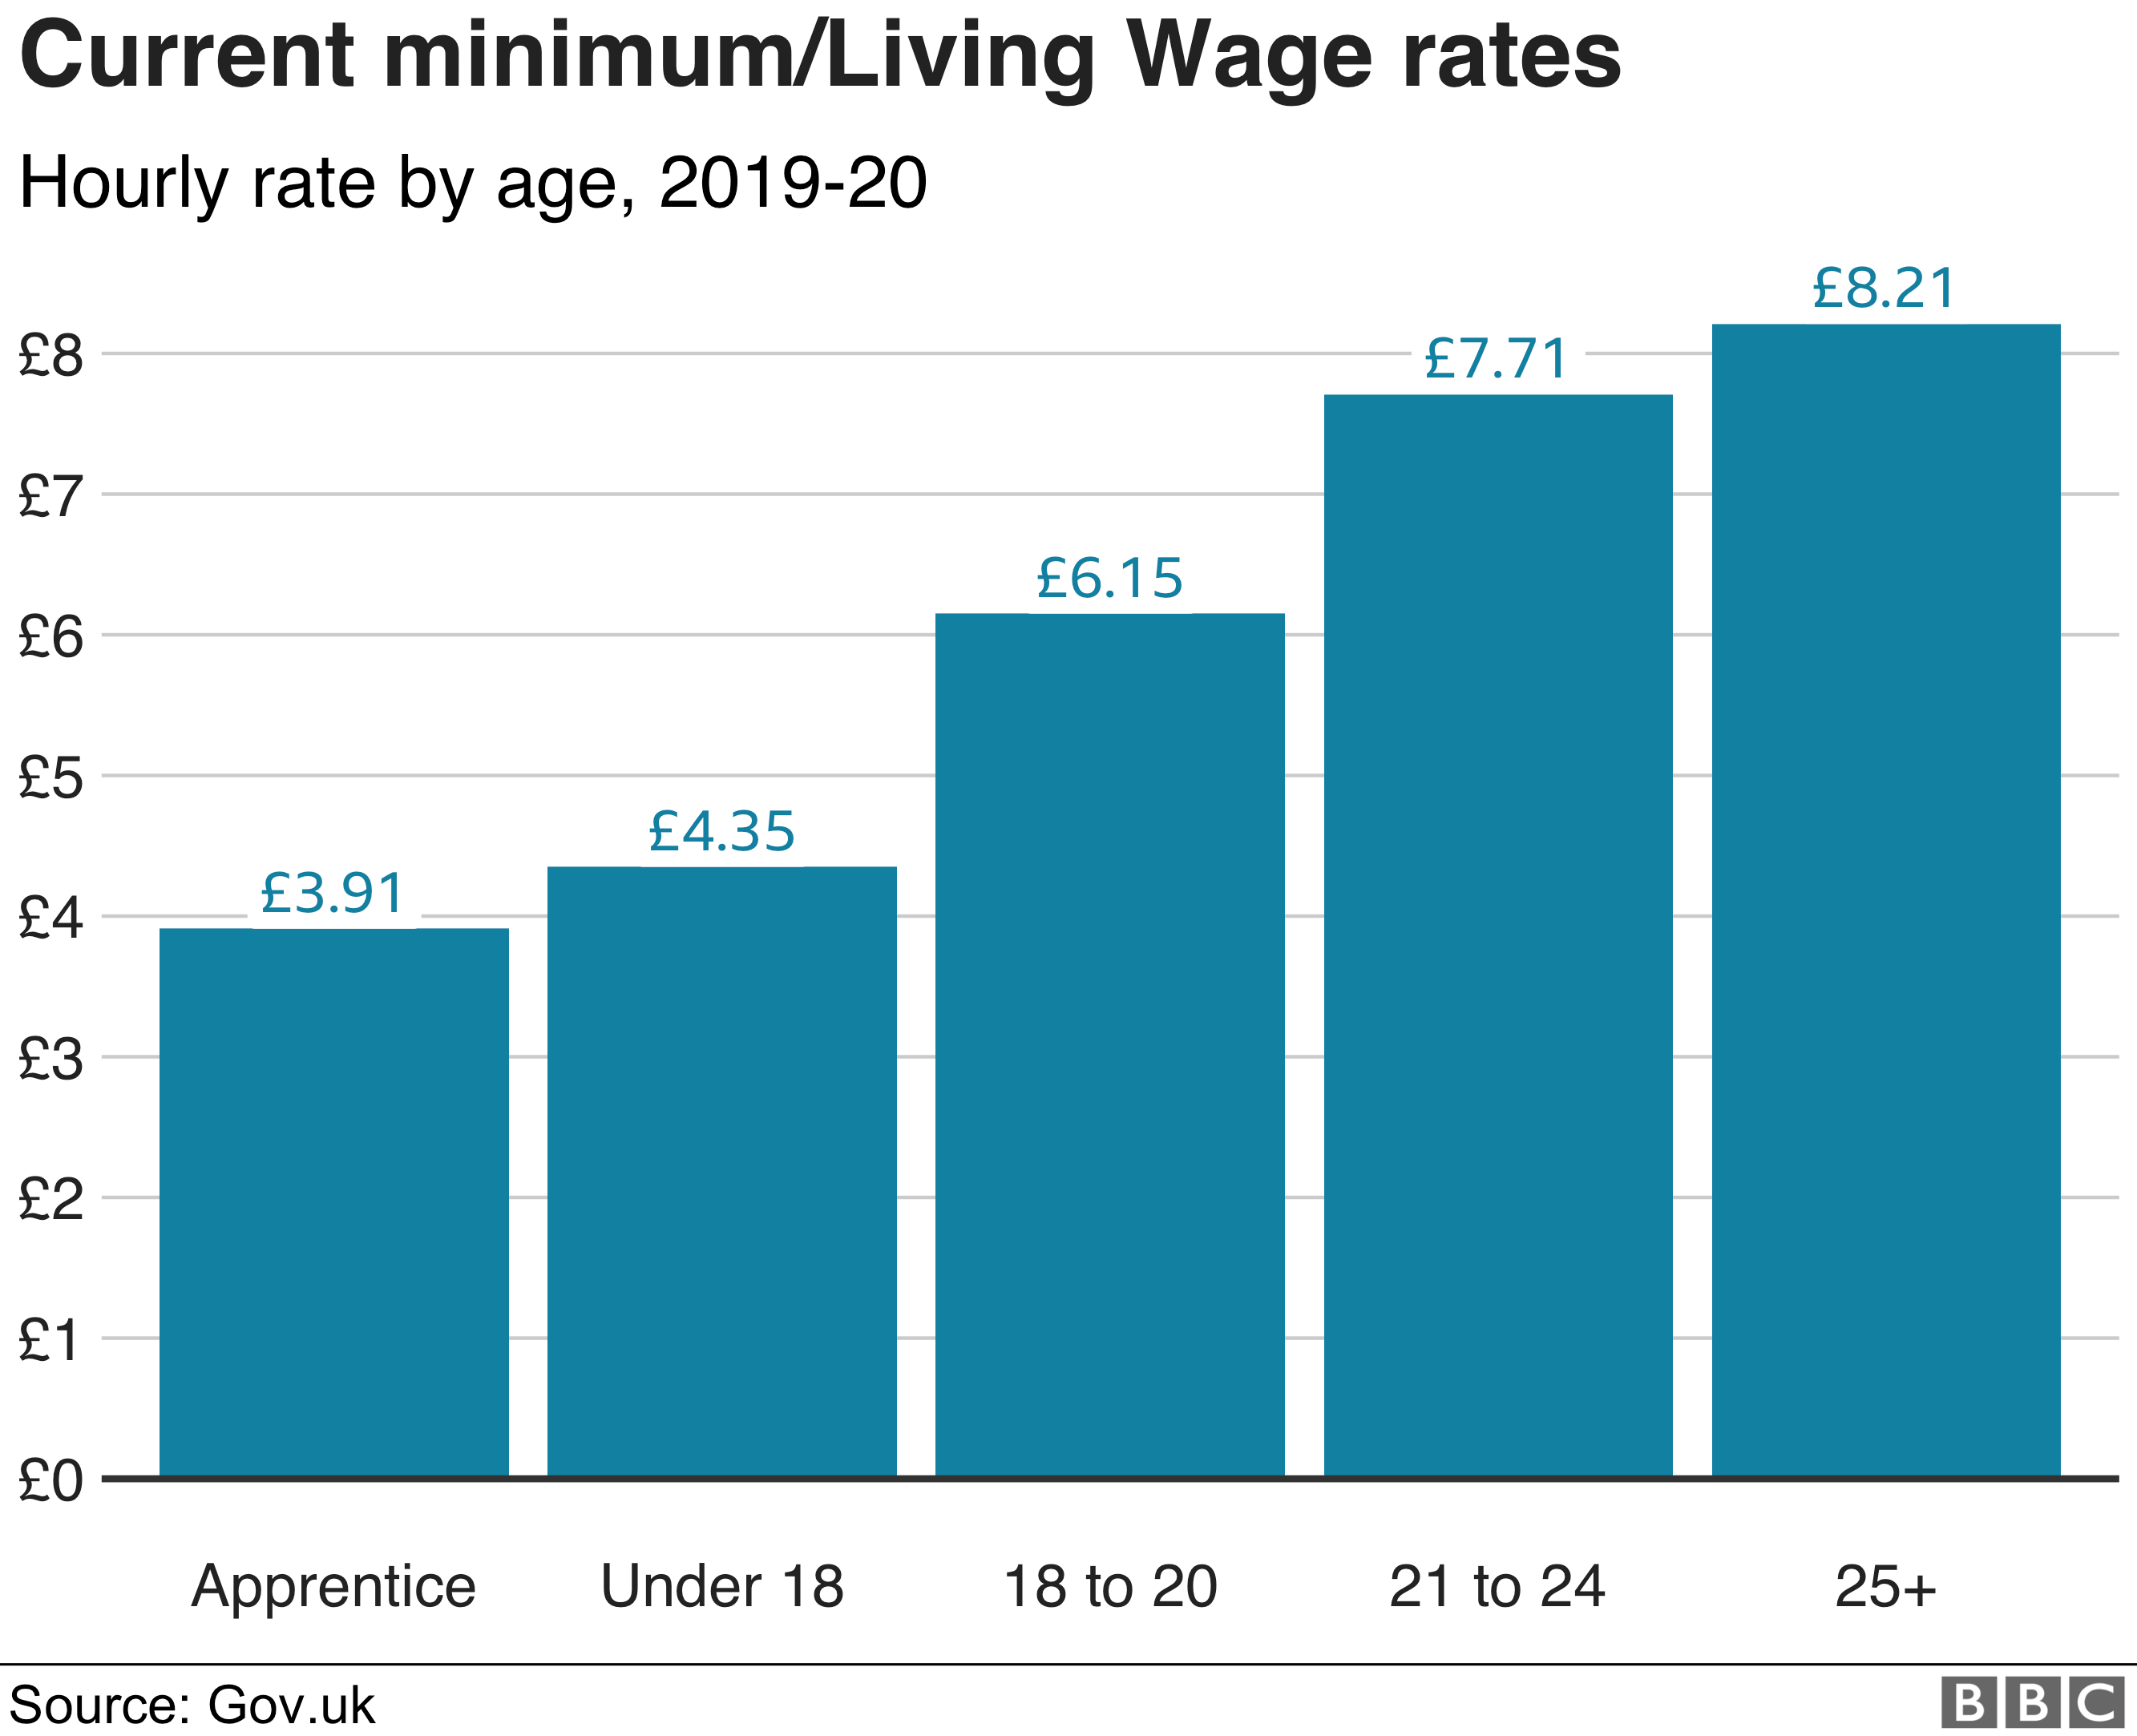 Current minimum/living wage rates